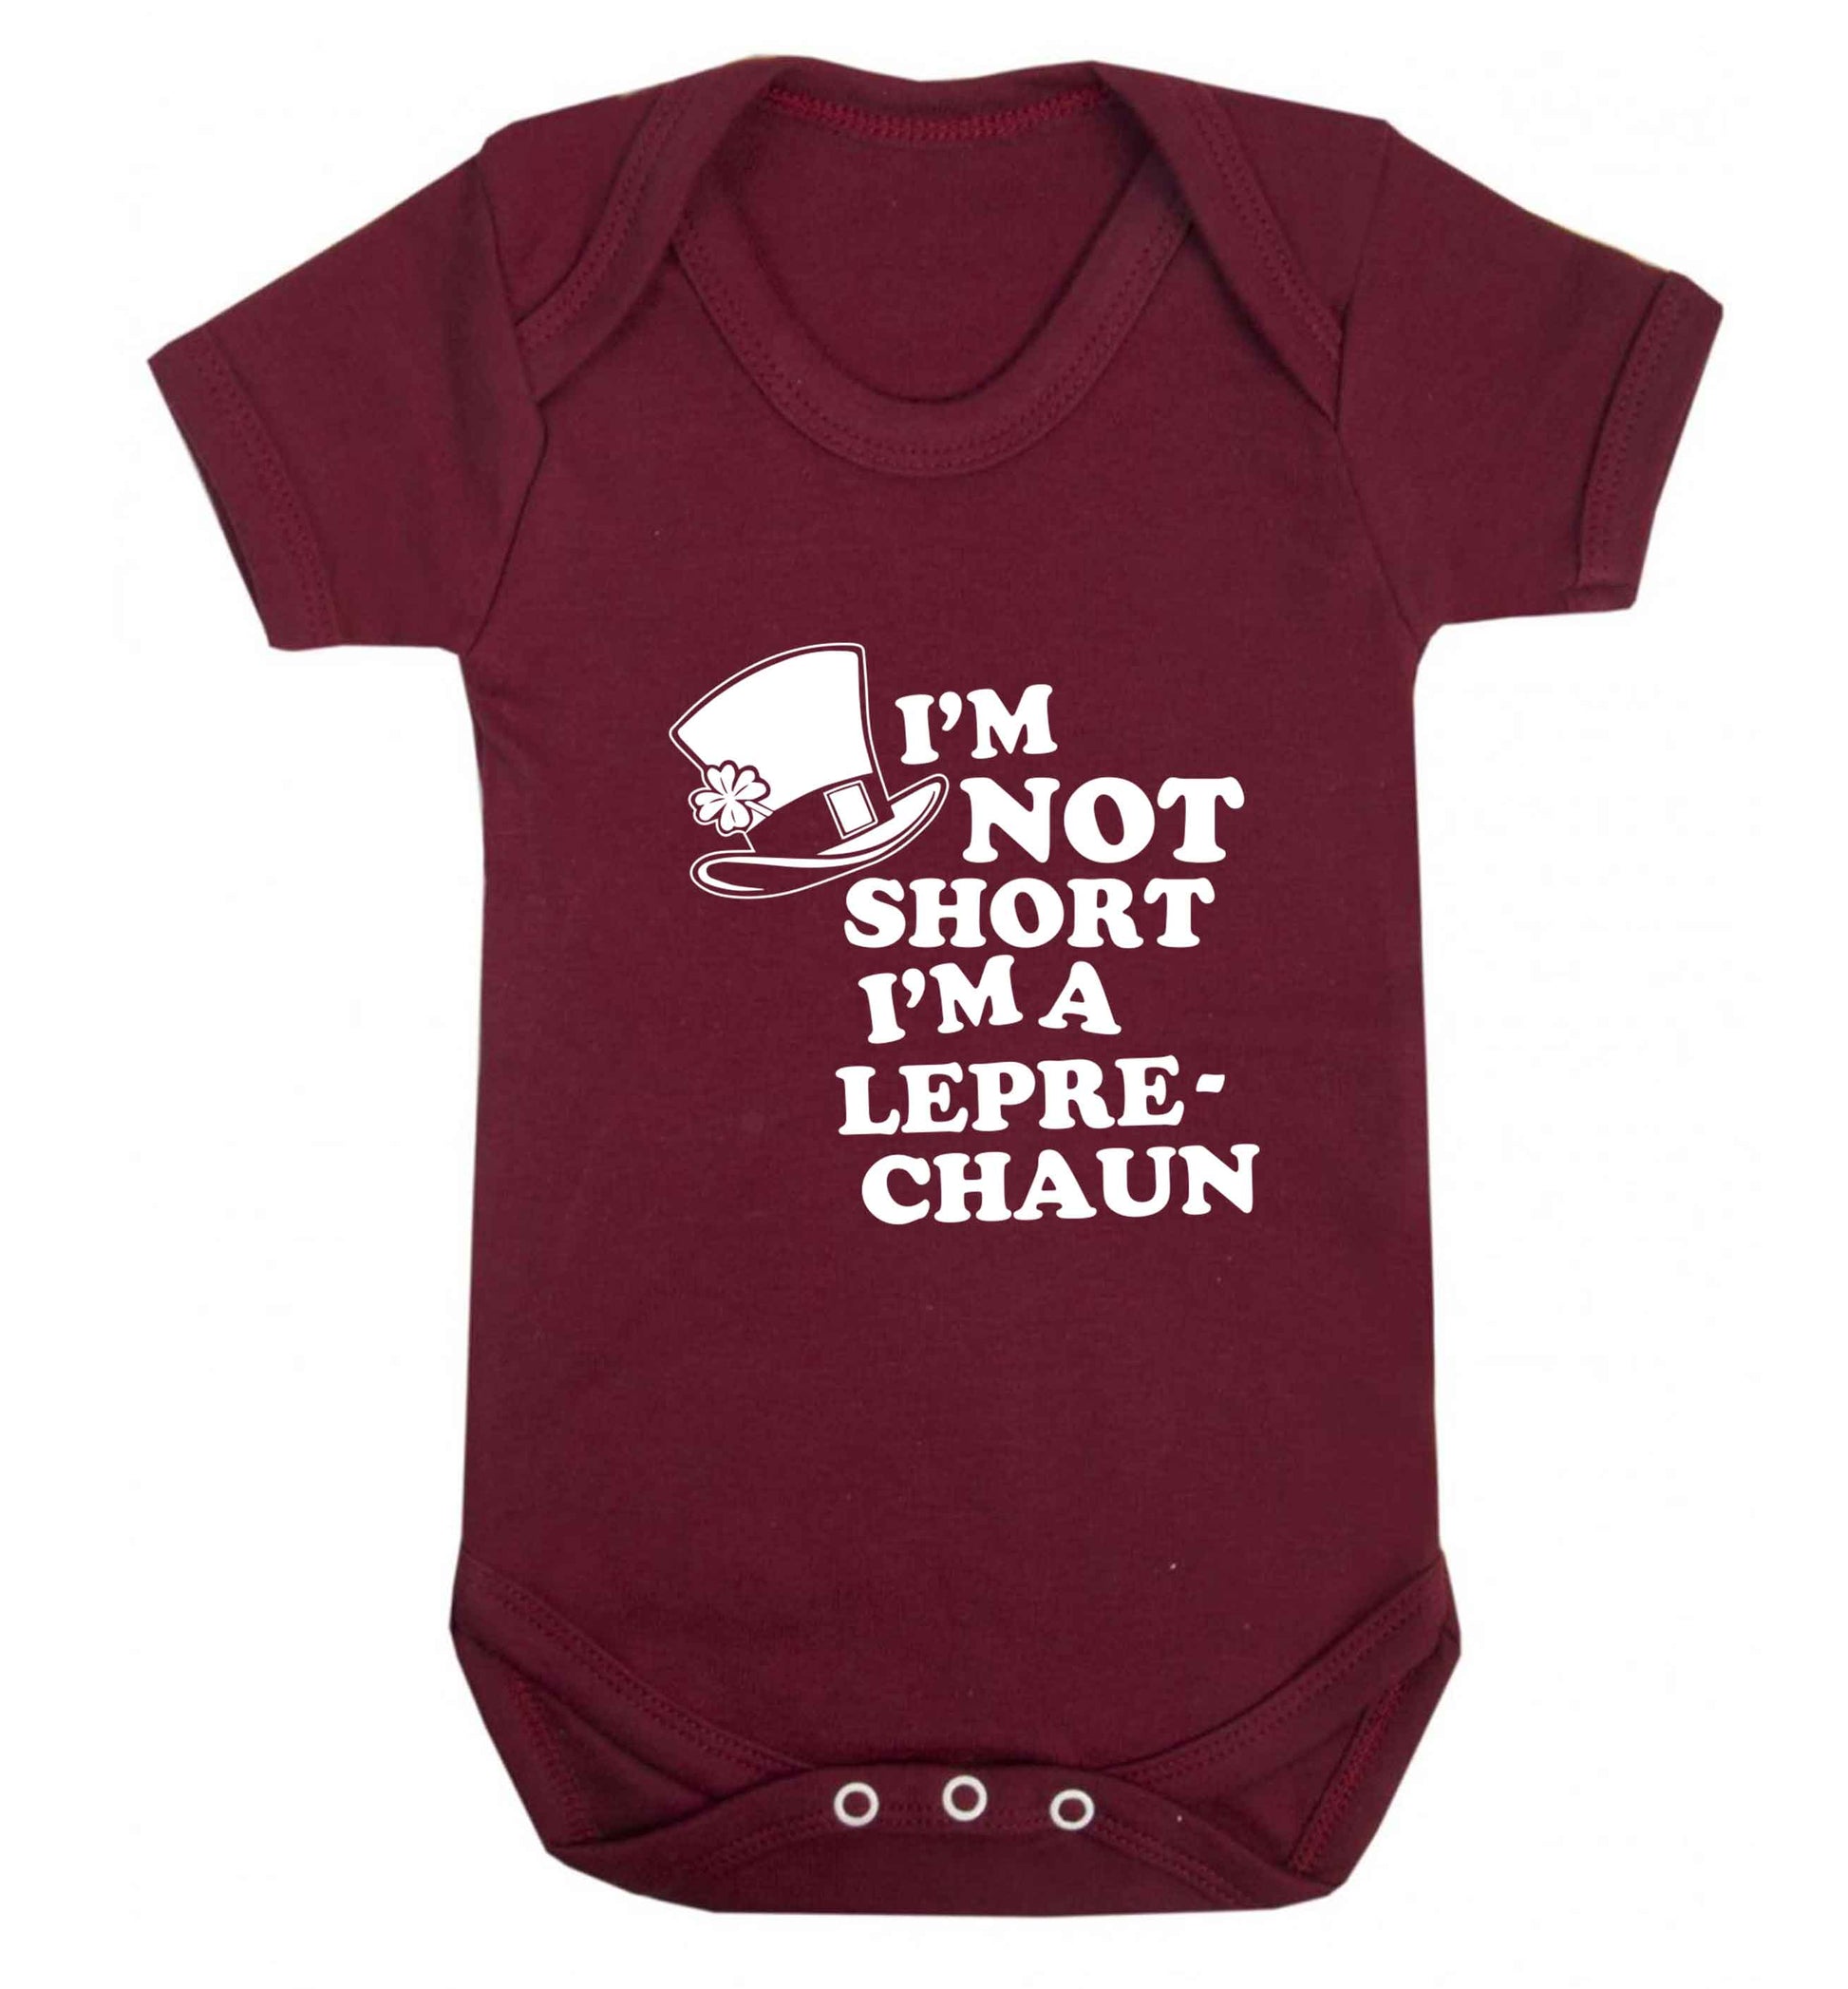 I'm not short I'm a leprechaun baby vest maroon 18-24 months